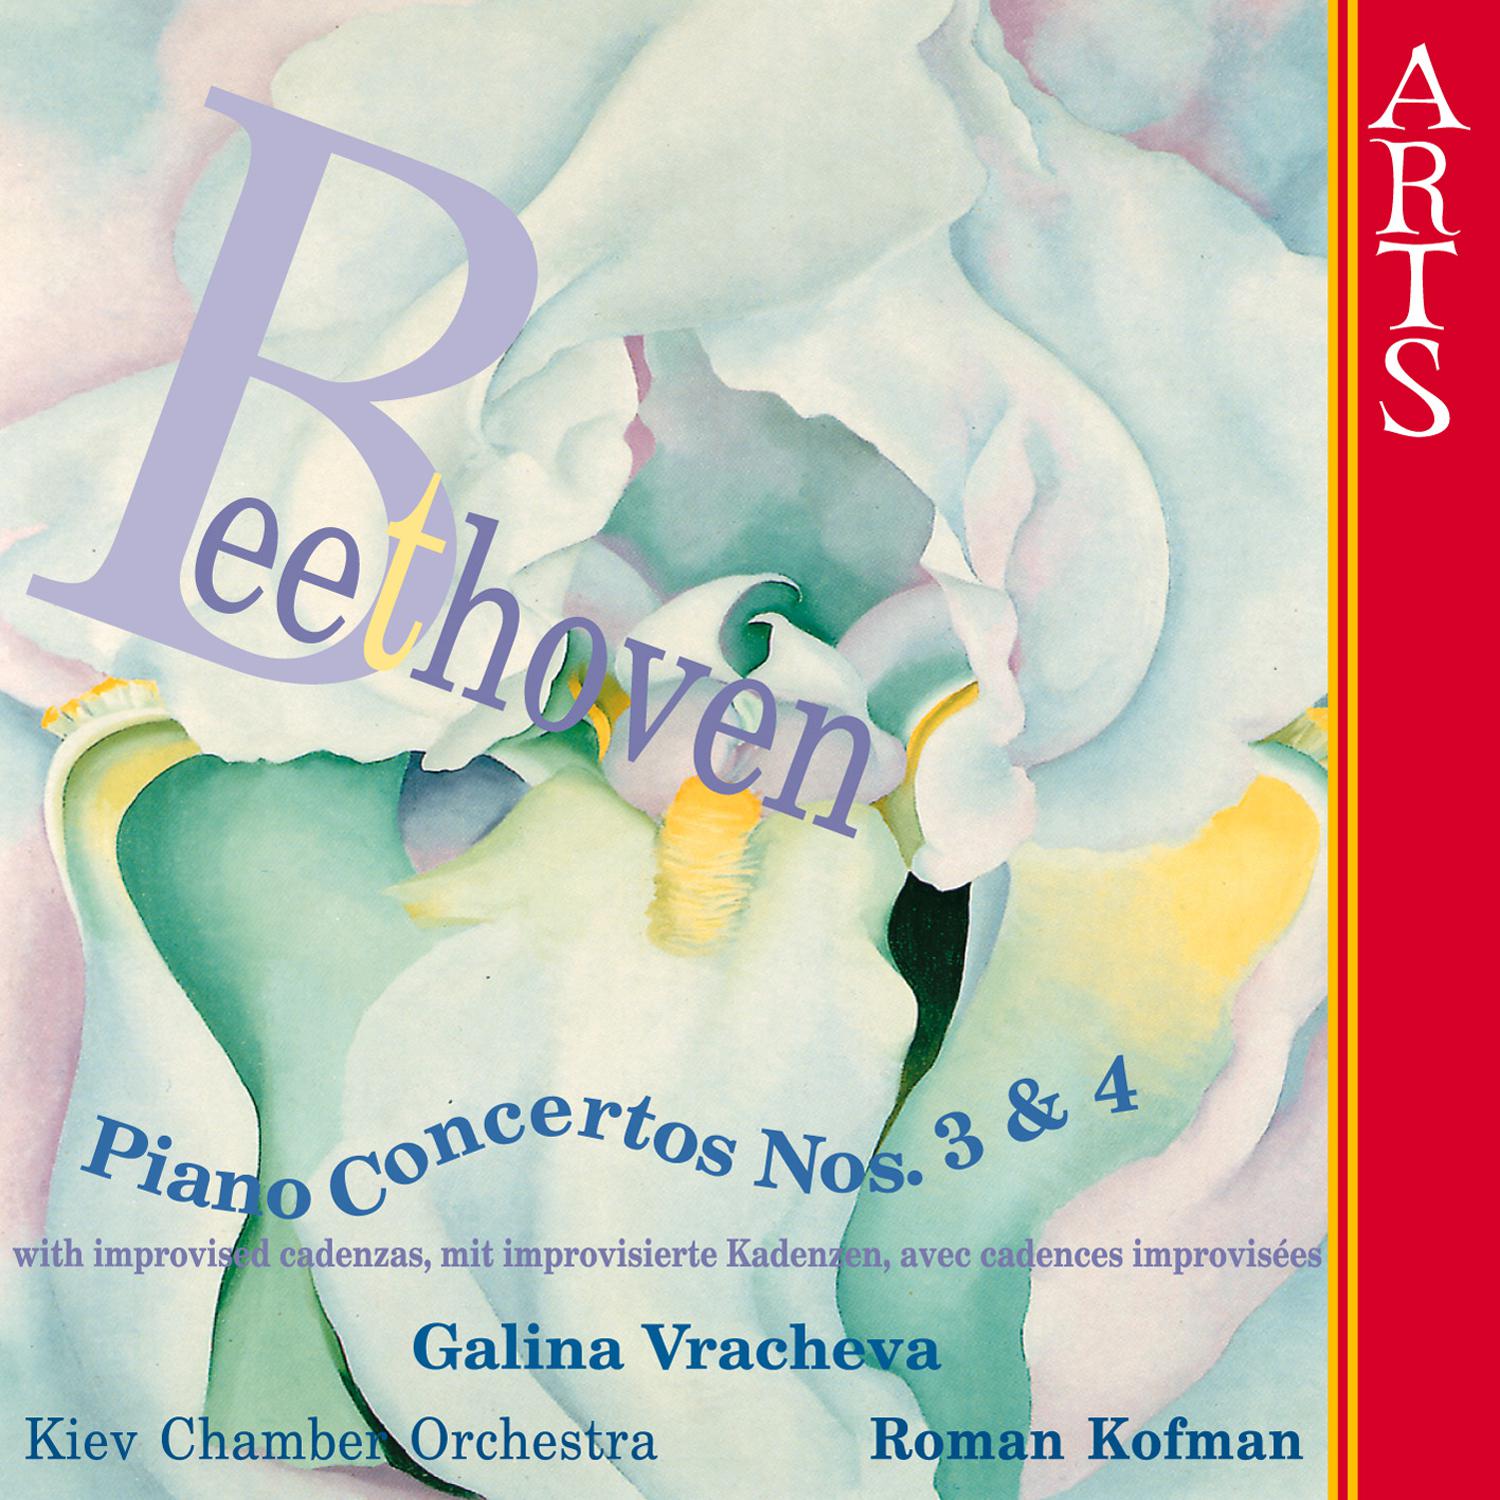 Kiev Chamber Orchestra - Piano Concerto No. 4 In G Major Op. 58: I. Allegro Moderato (Beethoven)